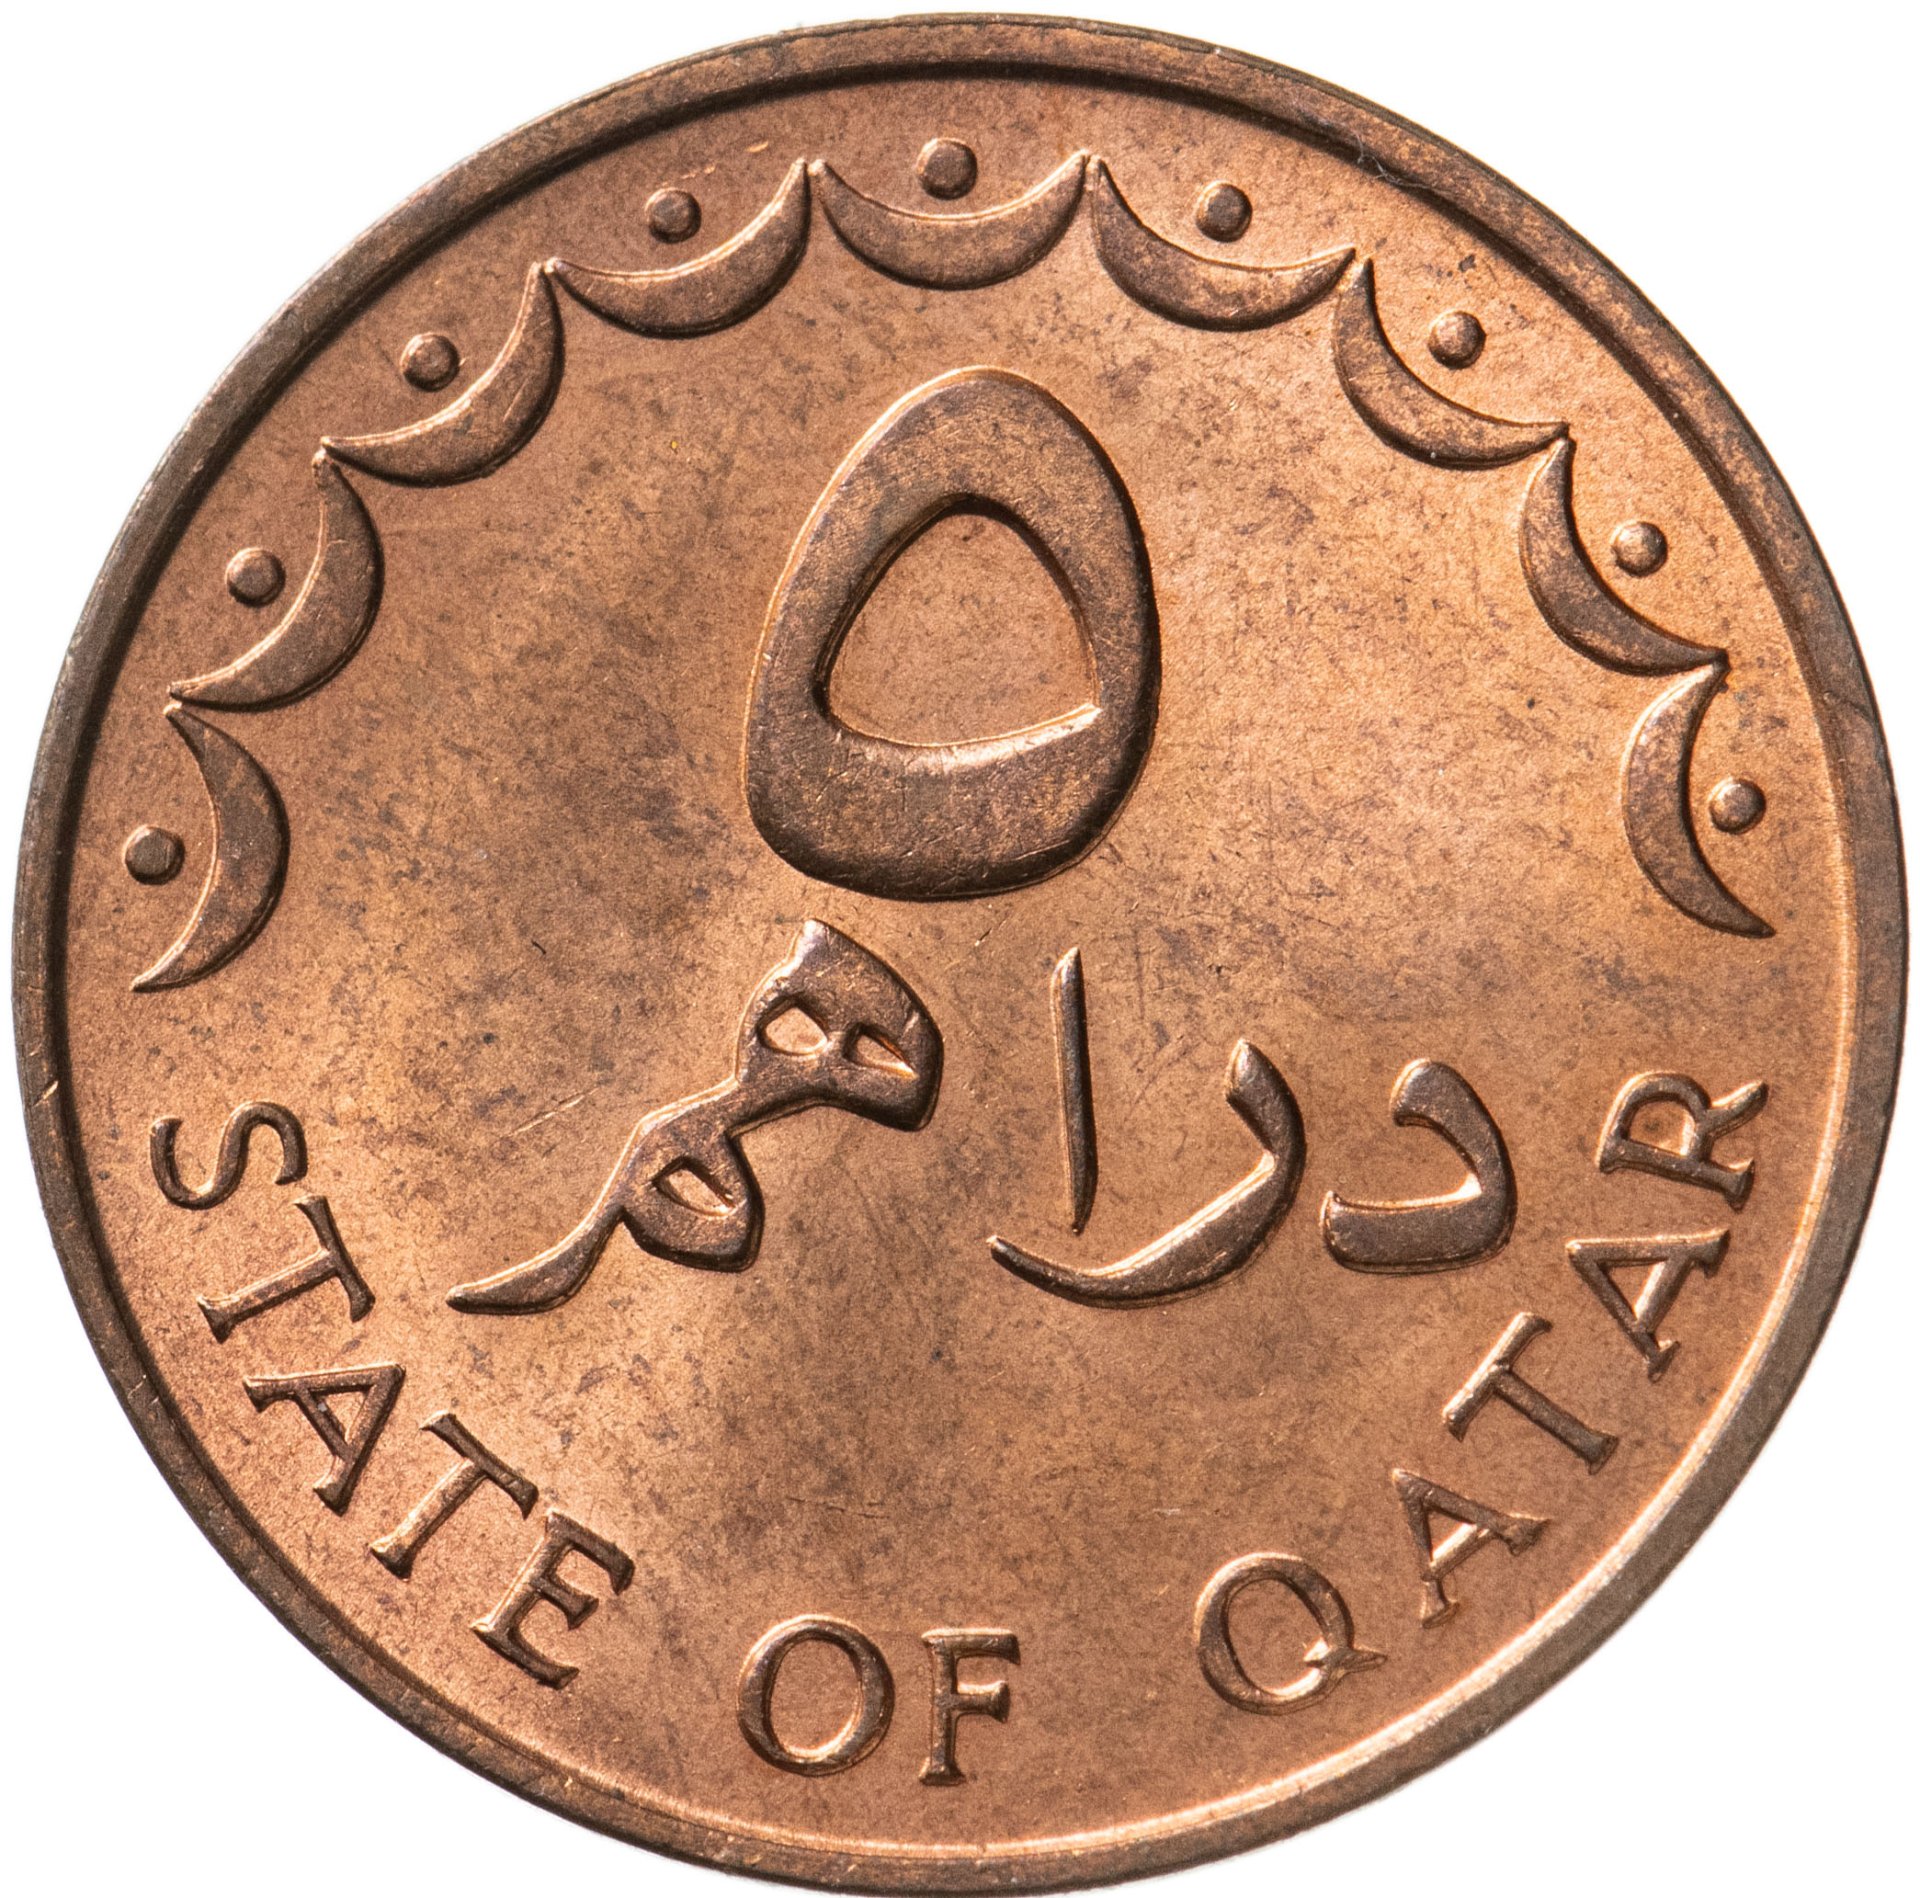 Монеты Катара. Монеты Катара каталог. Миллион марокканских дирхам.